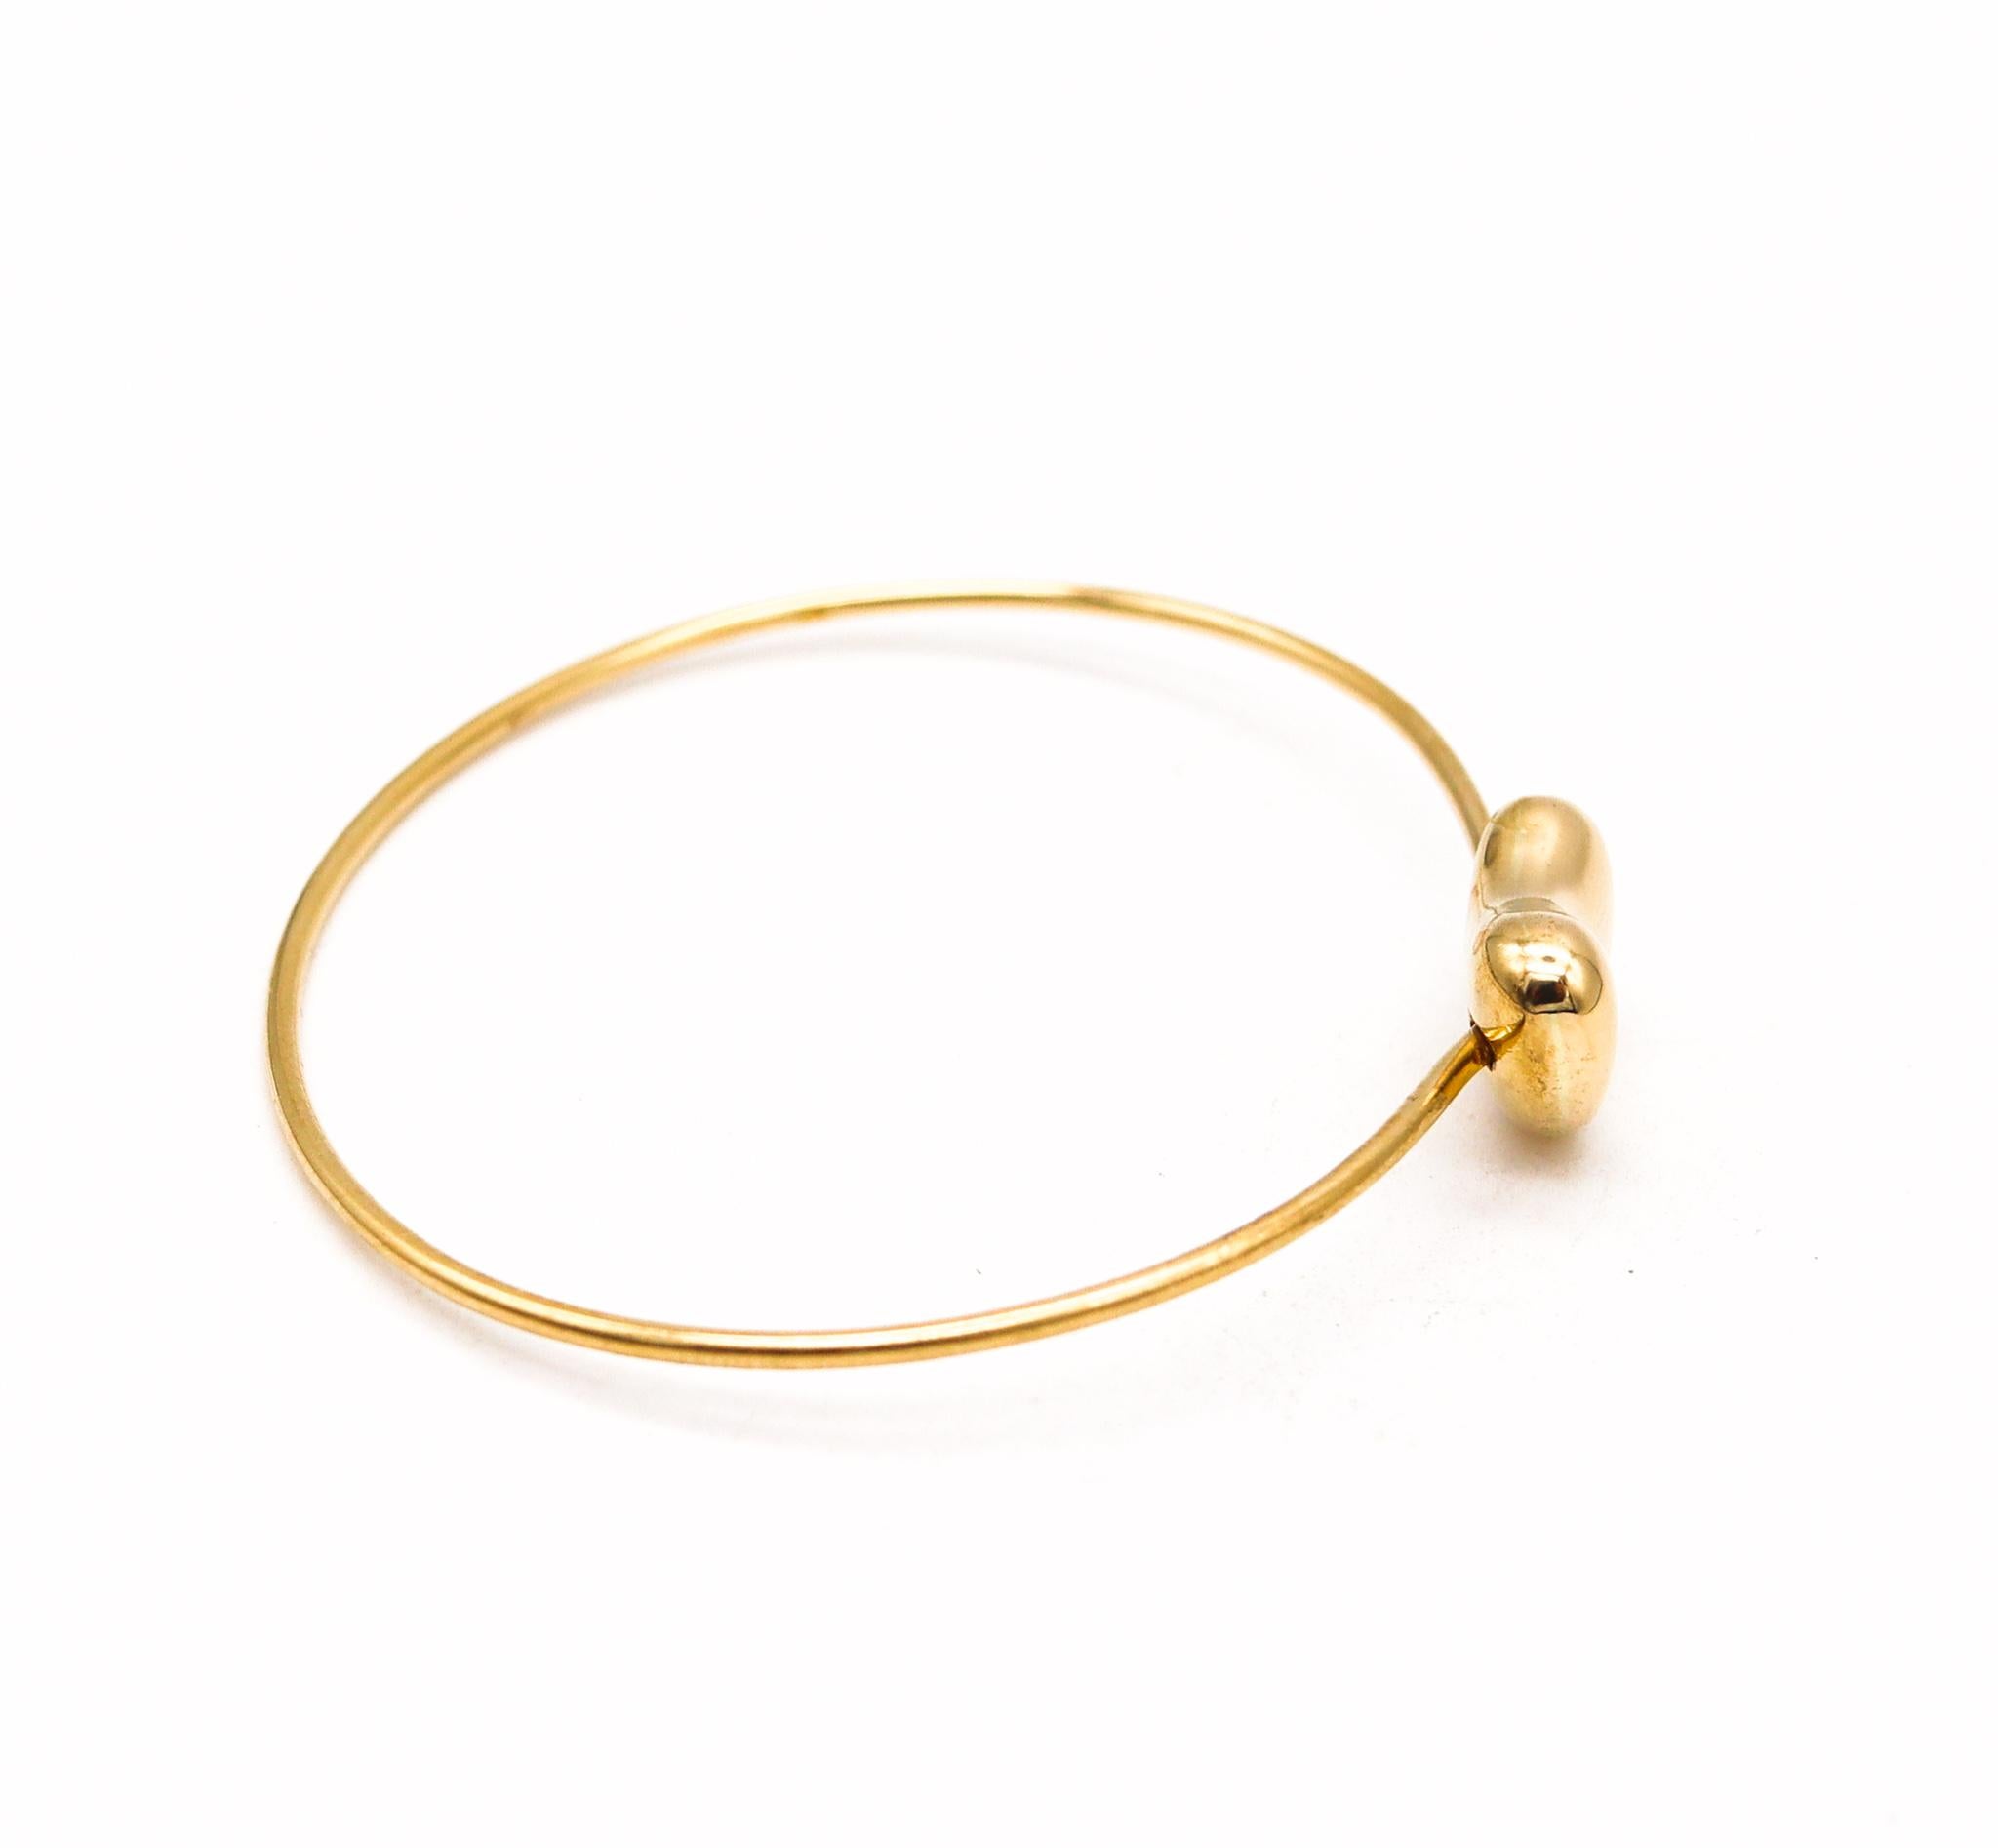 Modernist Tiffany & Co 1977 Elsa Peretti Rare Bean Bangle Bracelet in 18Kt Yellow Gold